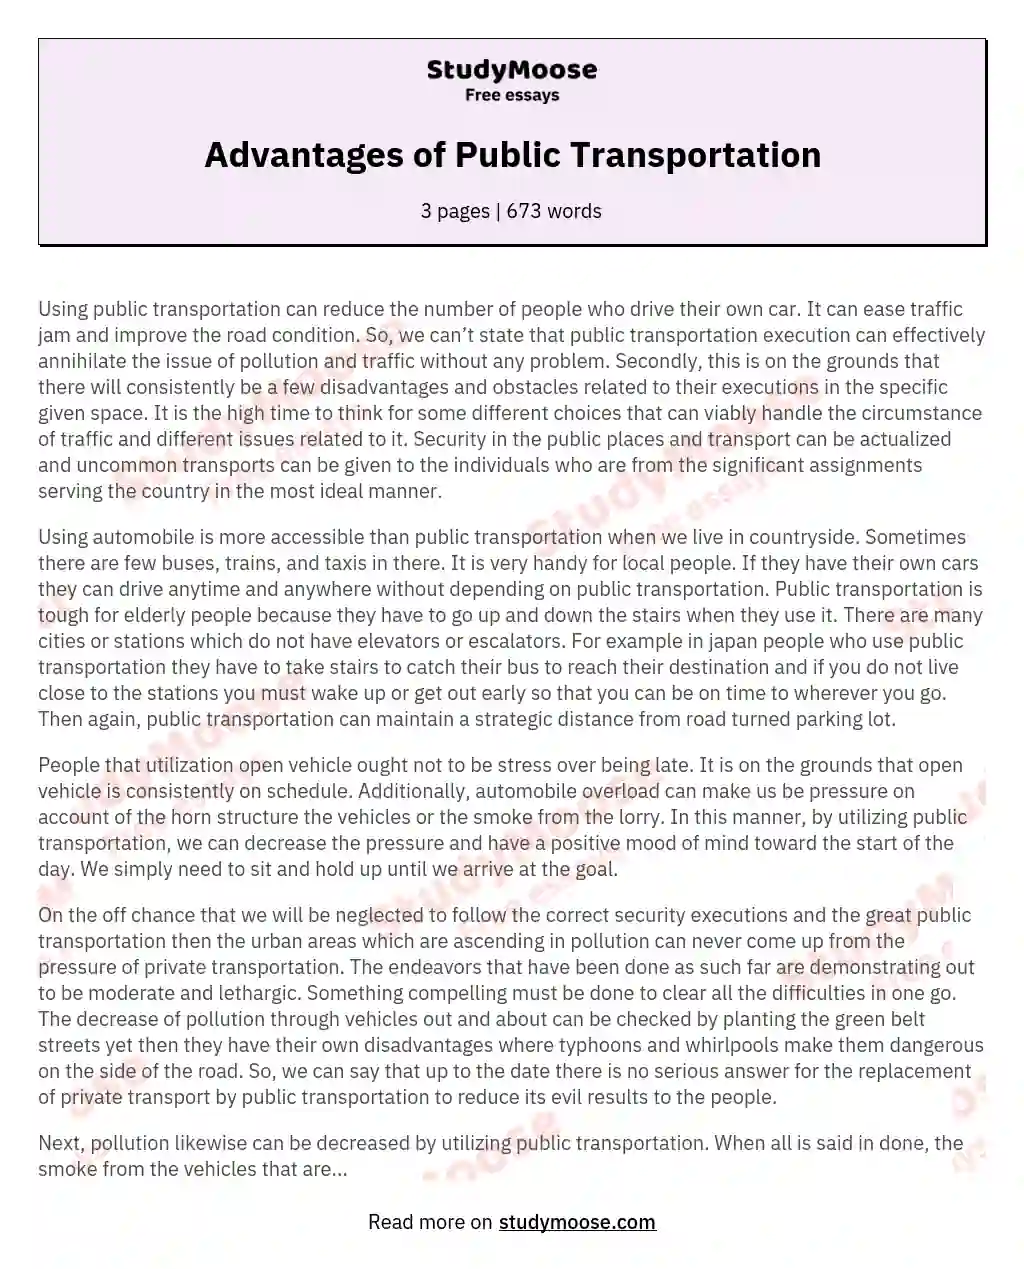 essay on make public transport free